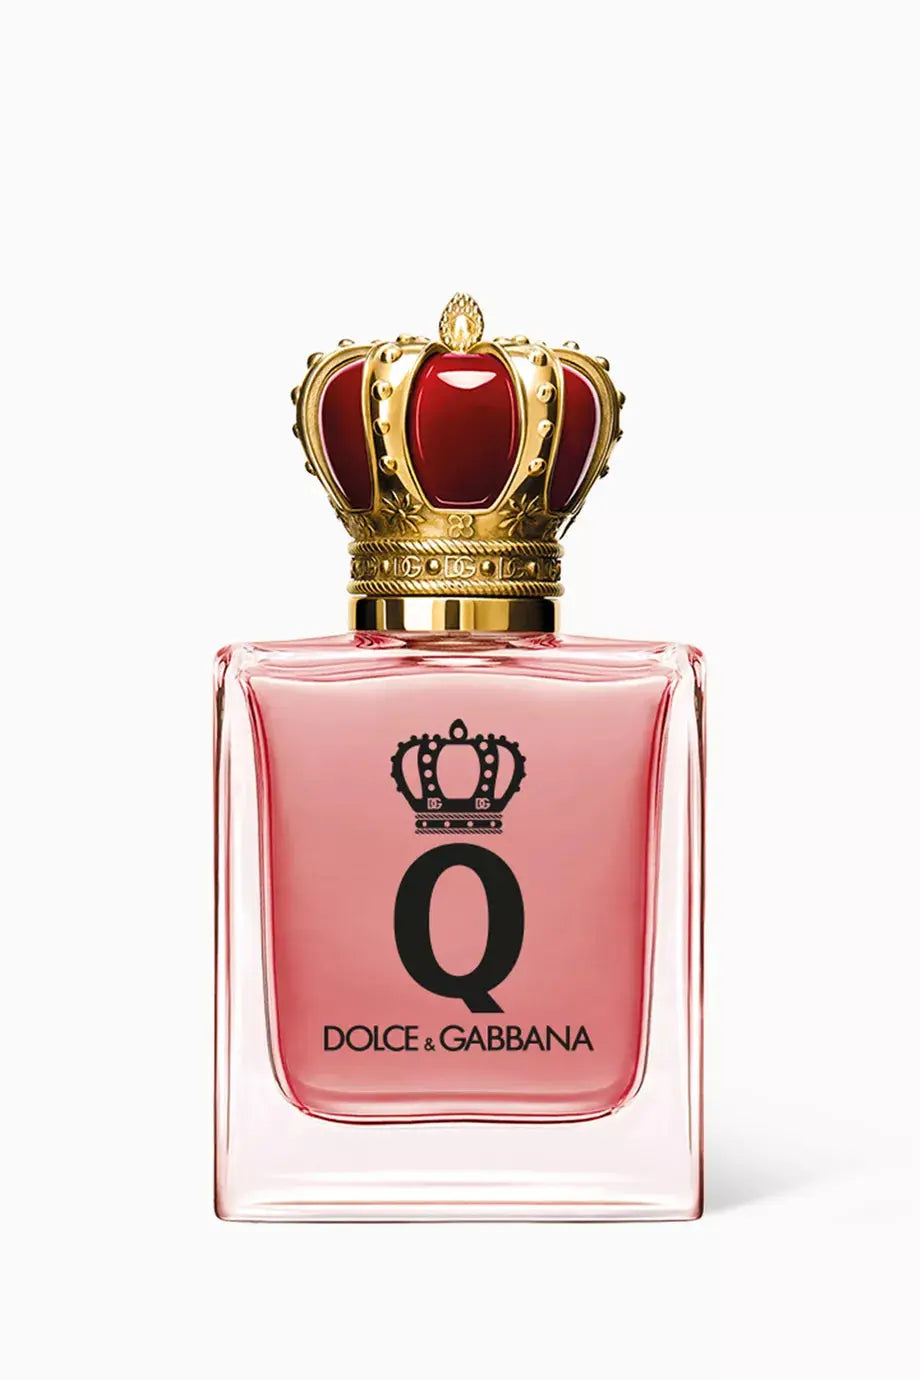 Q by Dolce&Gabbana Eau de Parfum Intense For Women